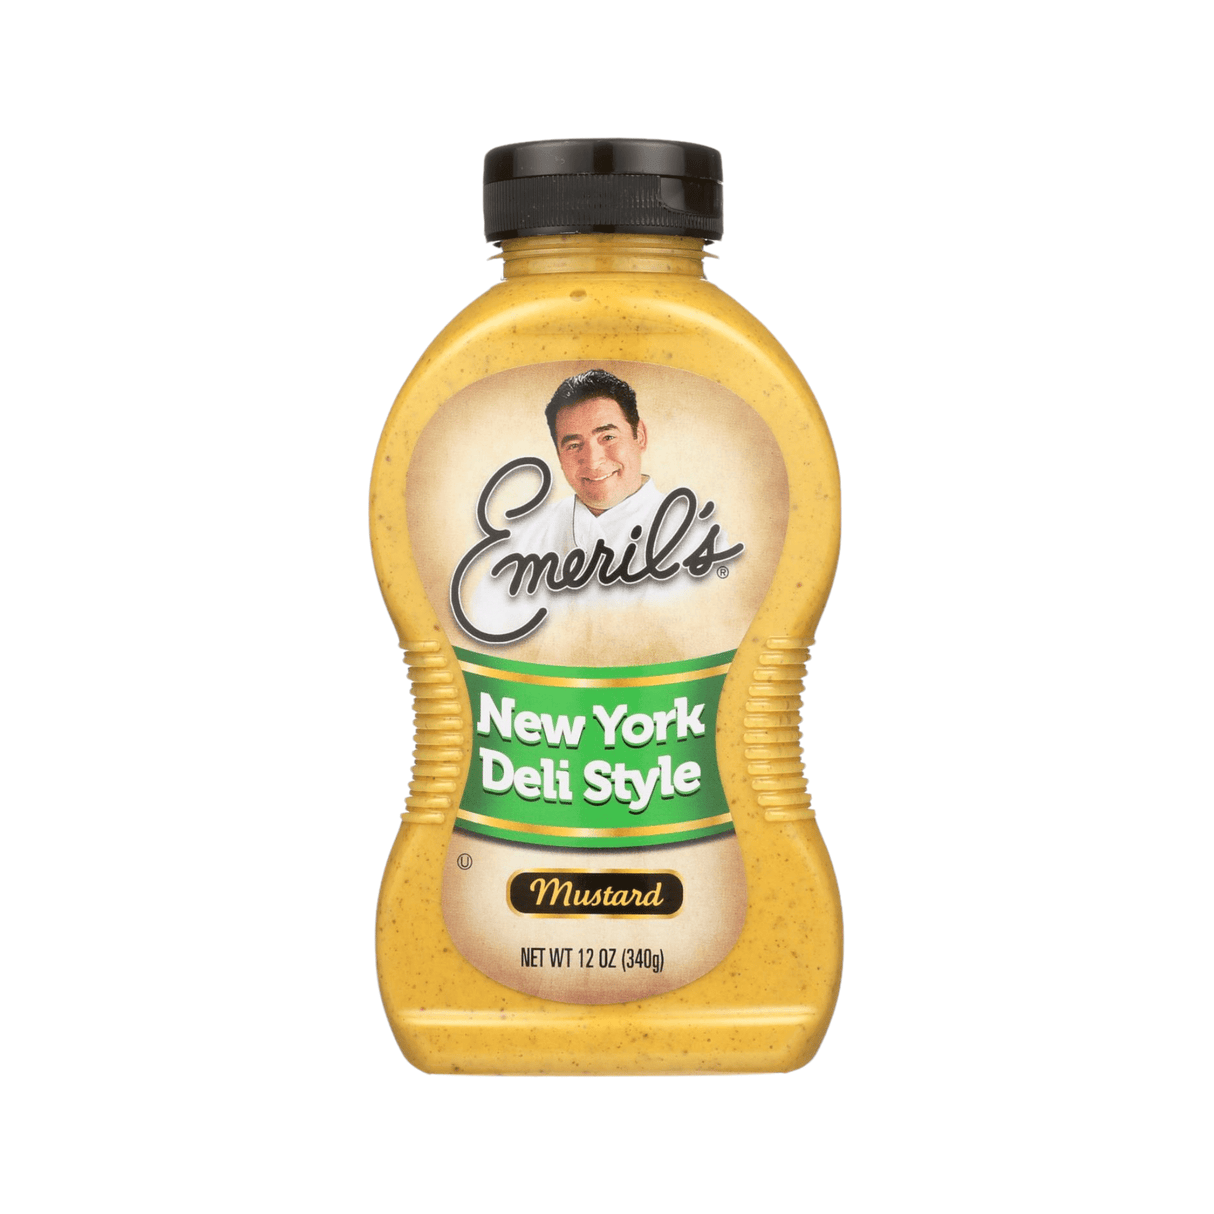 Emeril’s New York Deli Style Mustard